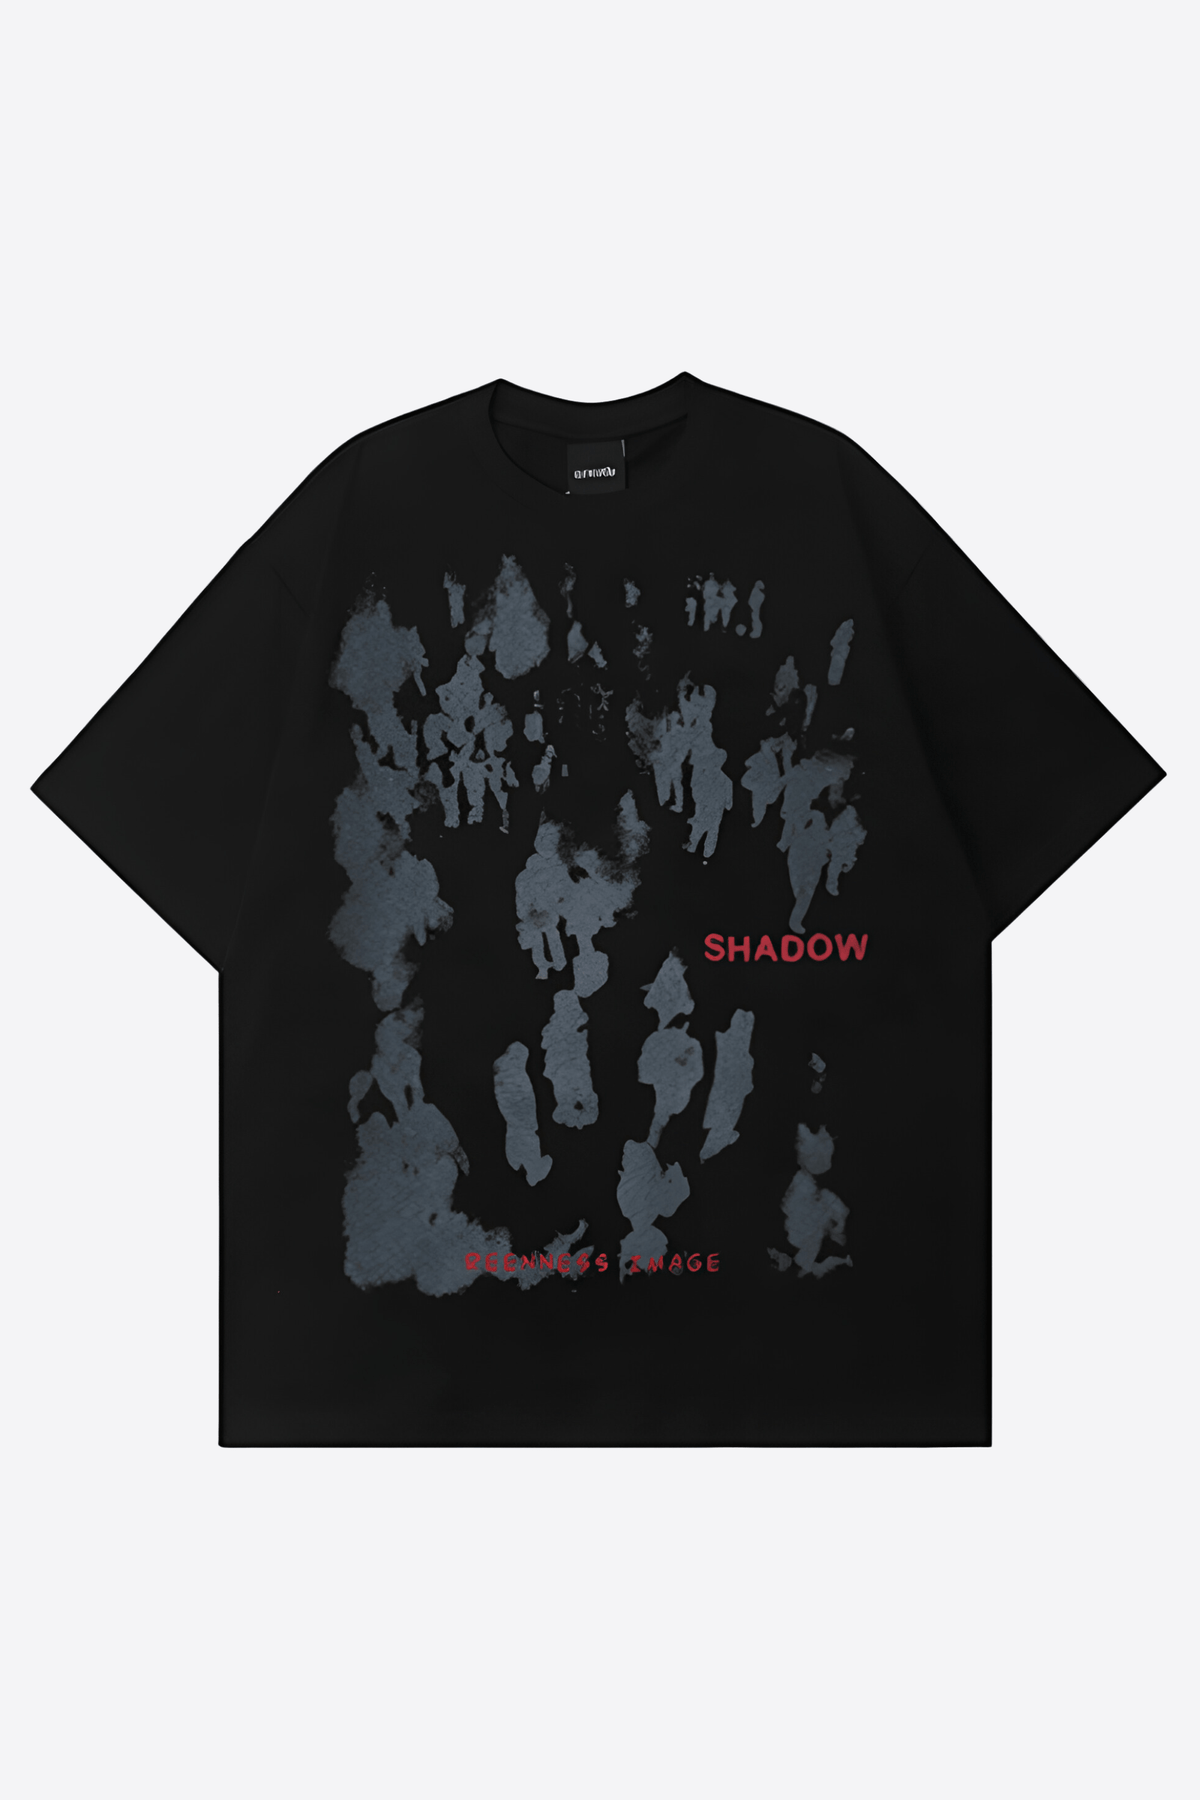 Alessandro Toscani™ Black / S SASHA™ | Streetwear Shadow T-Shirt